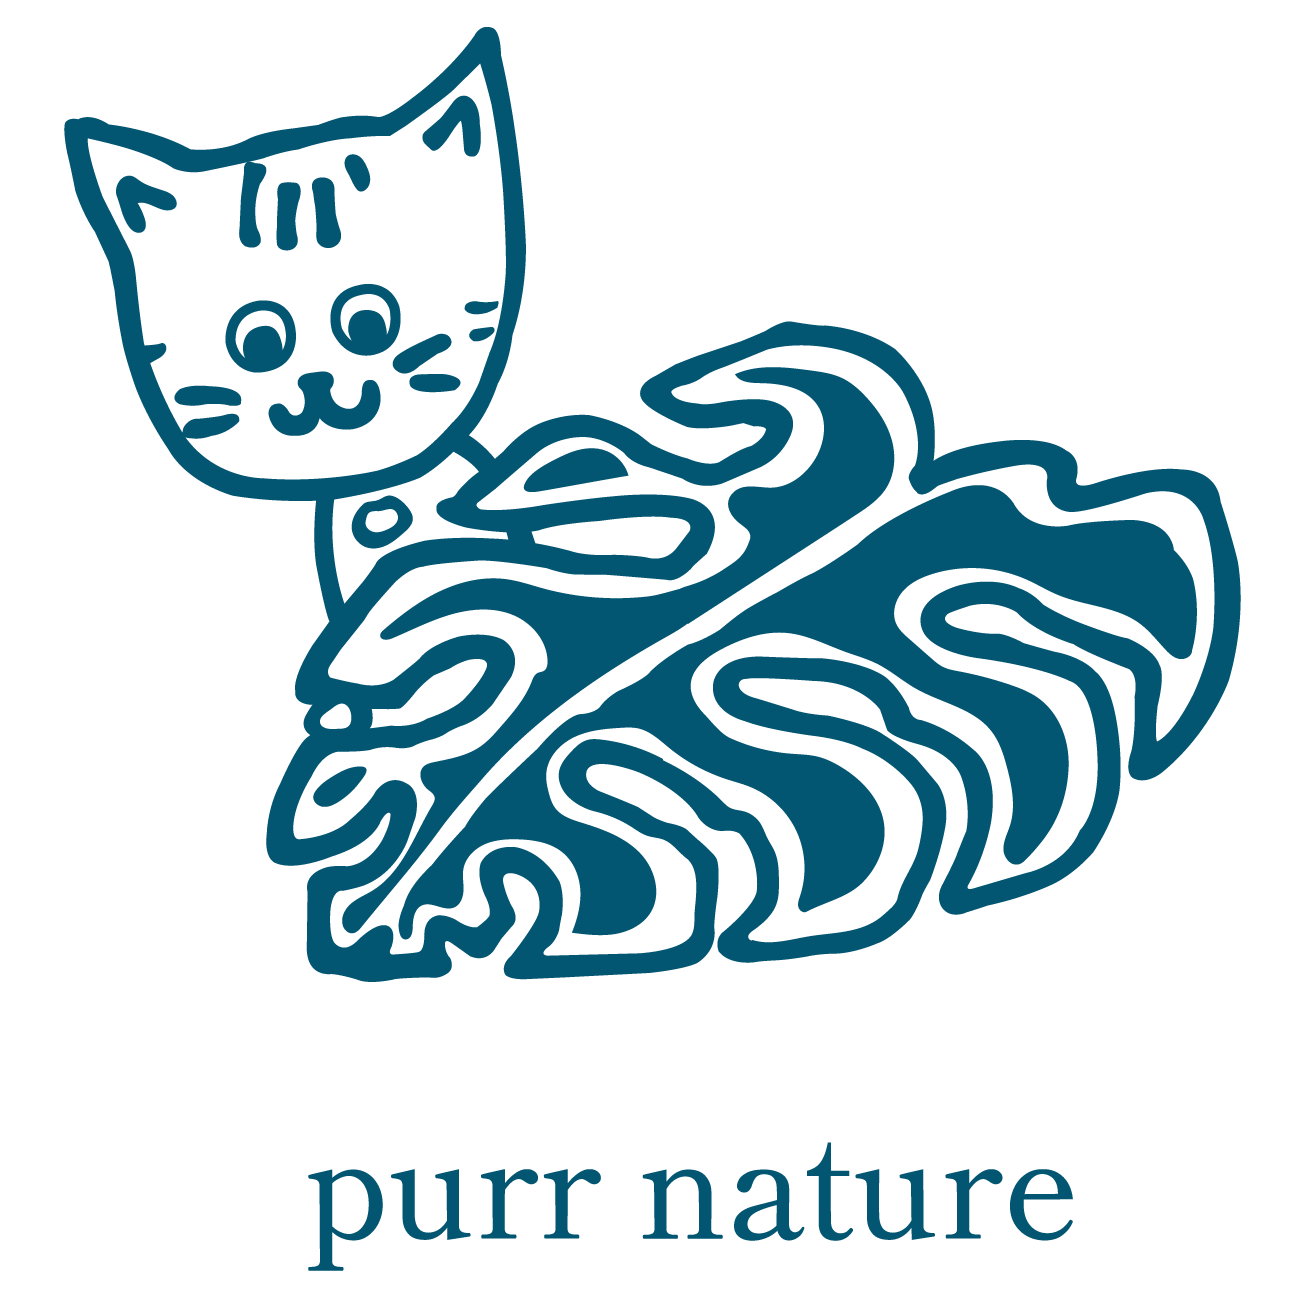 Purr-nature